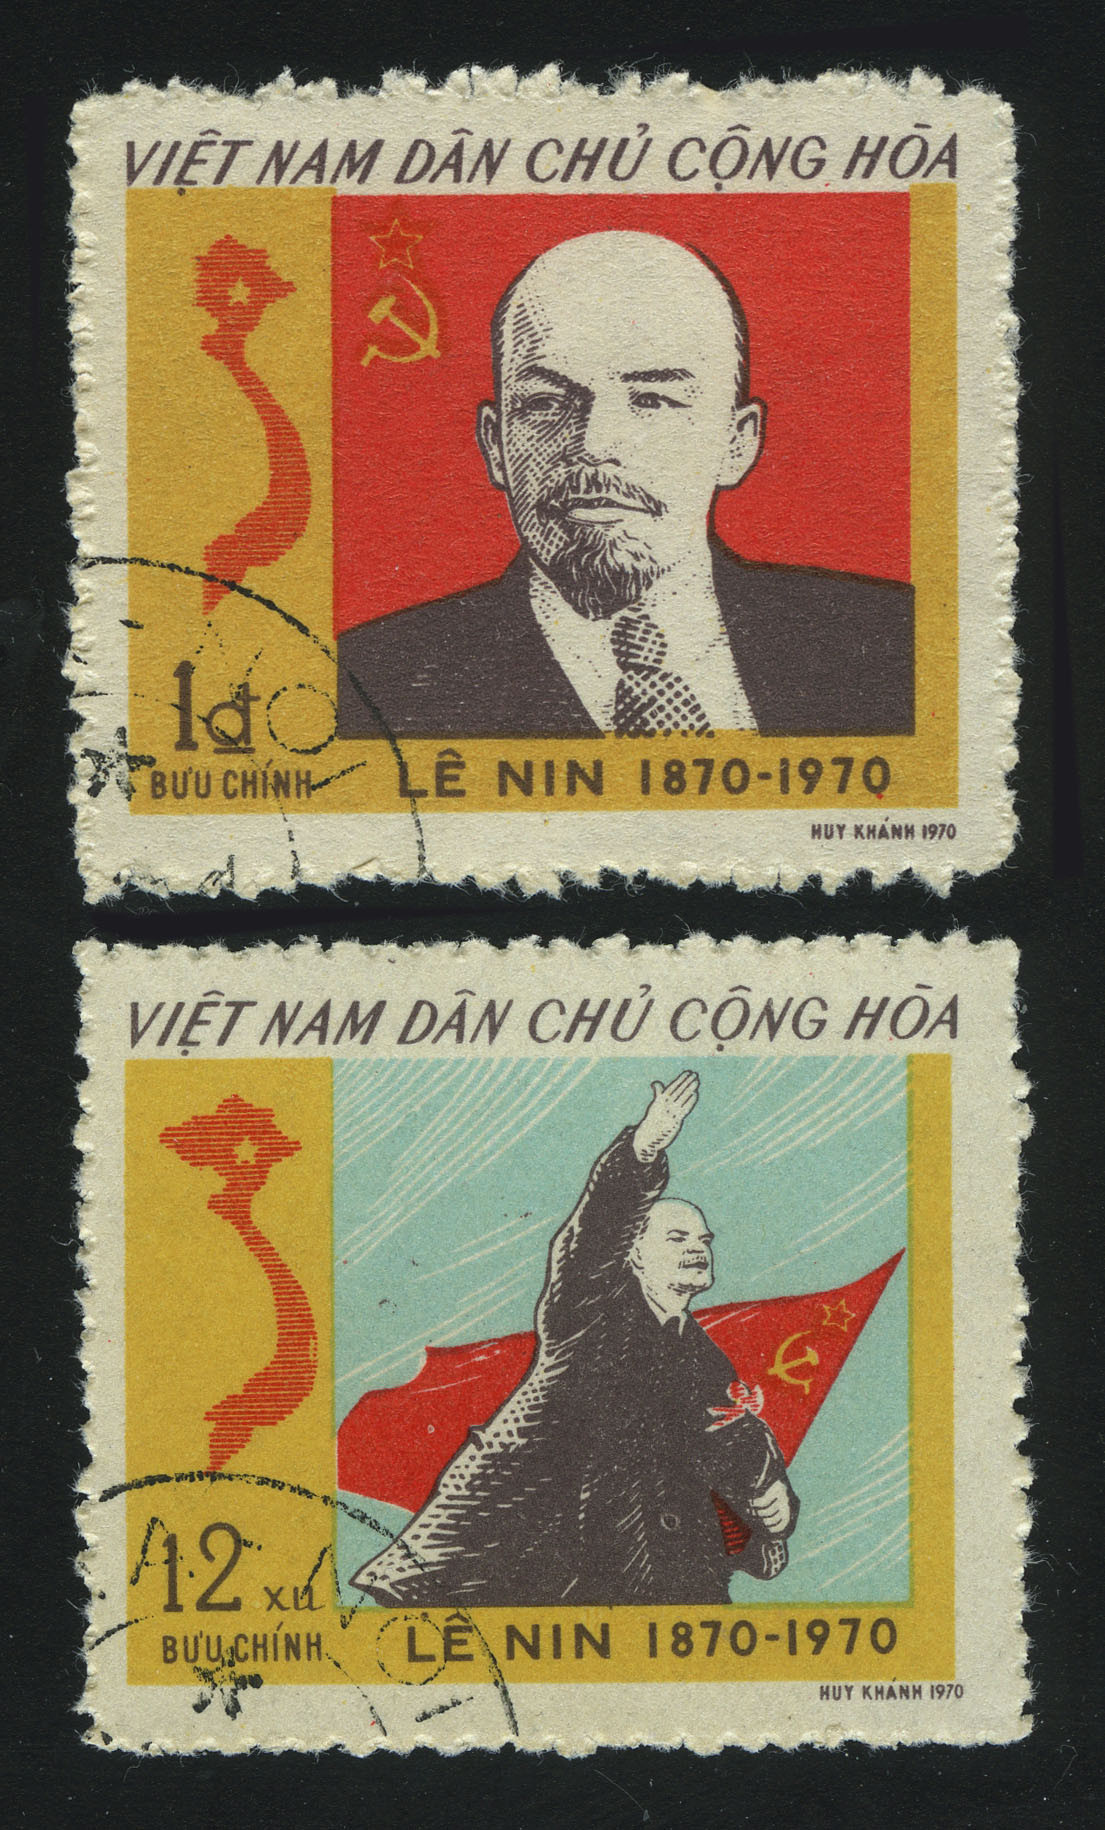 1970 The 100th Anniversary of the Birth of Vladimir Ilyich Lenin, 1870-1924